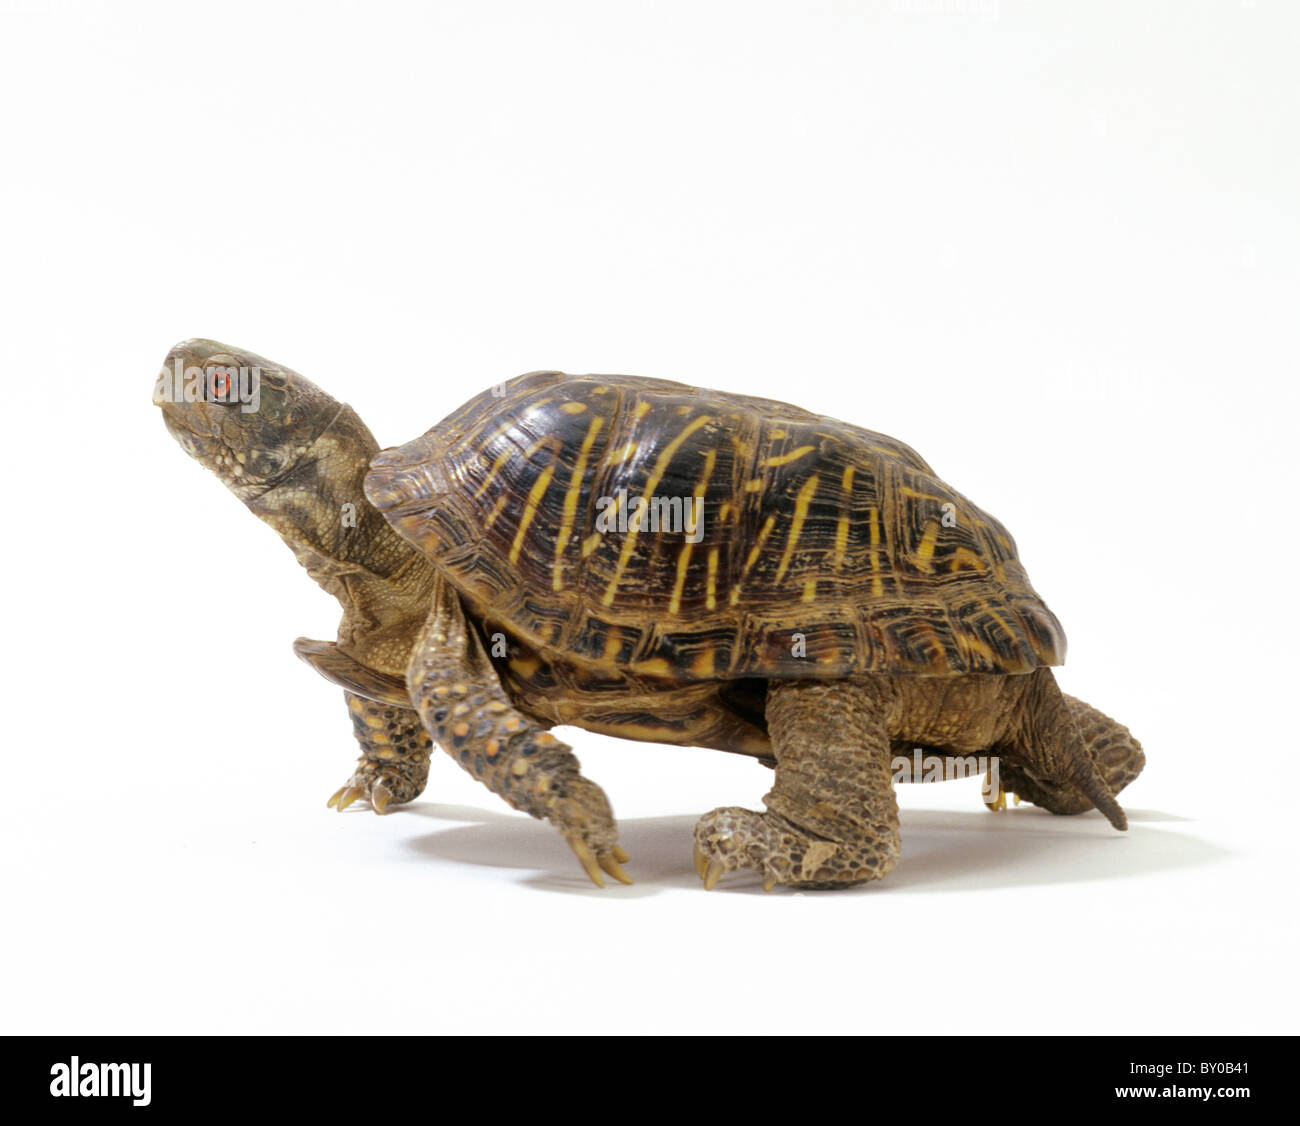 Ornate box turtle (Terrapene ornata). Studio picture seen against a white background Stock Photo